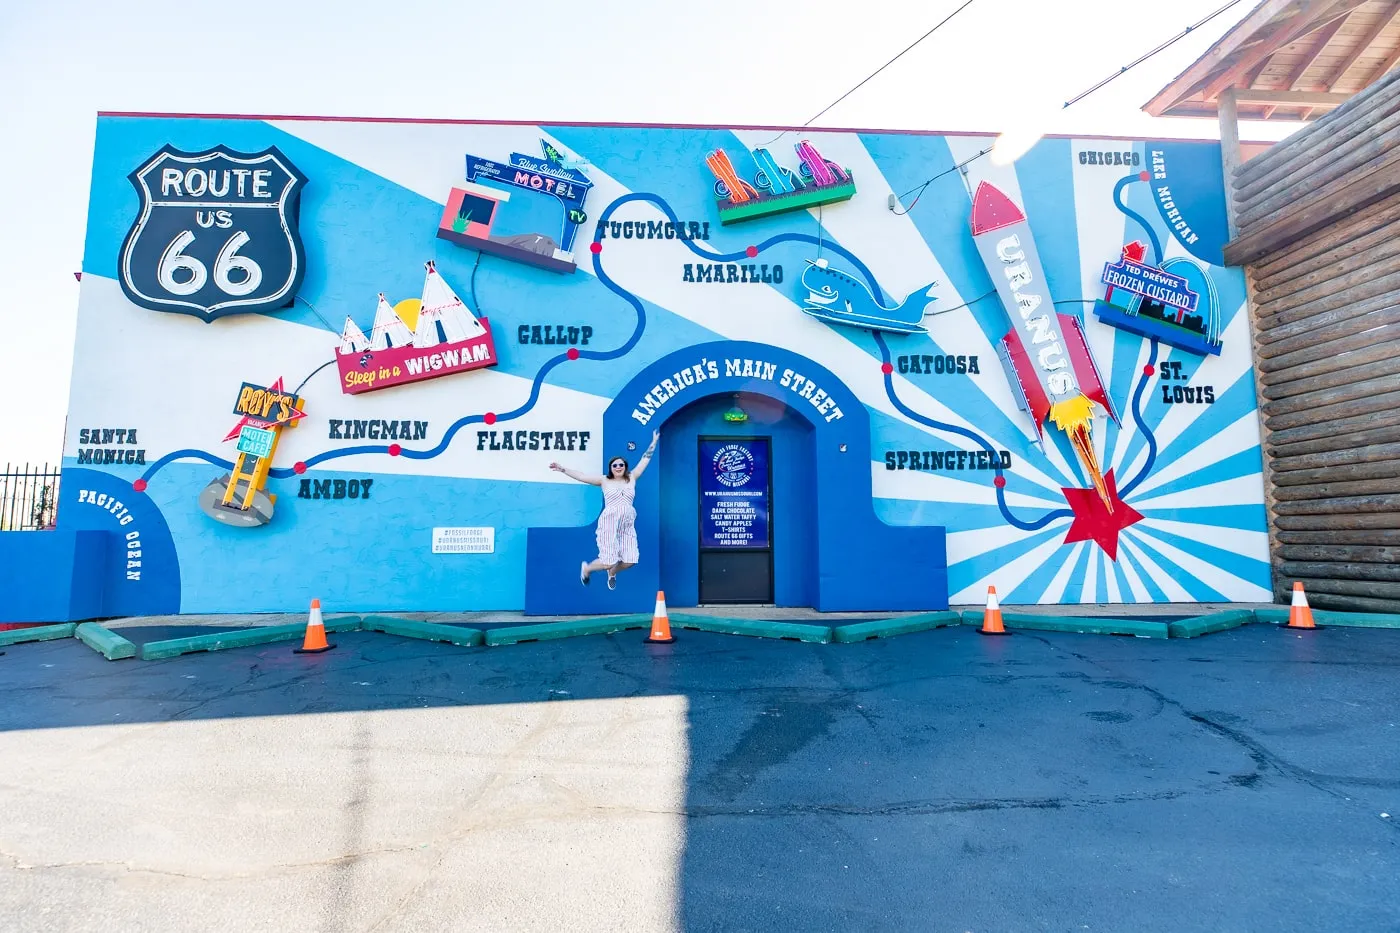 Route 66 mural at Uranus, Missouri and the Uranus Fudge Factory and General Store - Route 66 Roadside Attraction